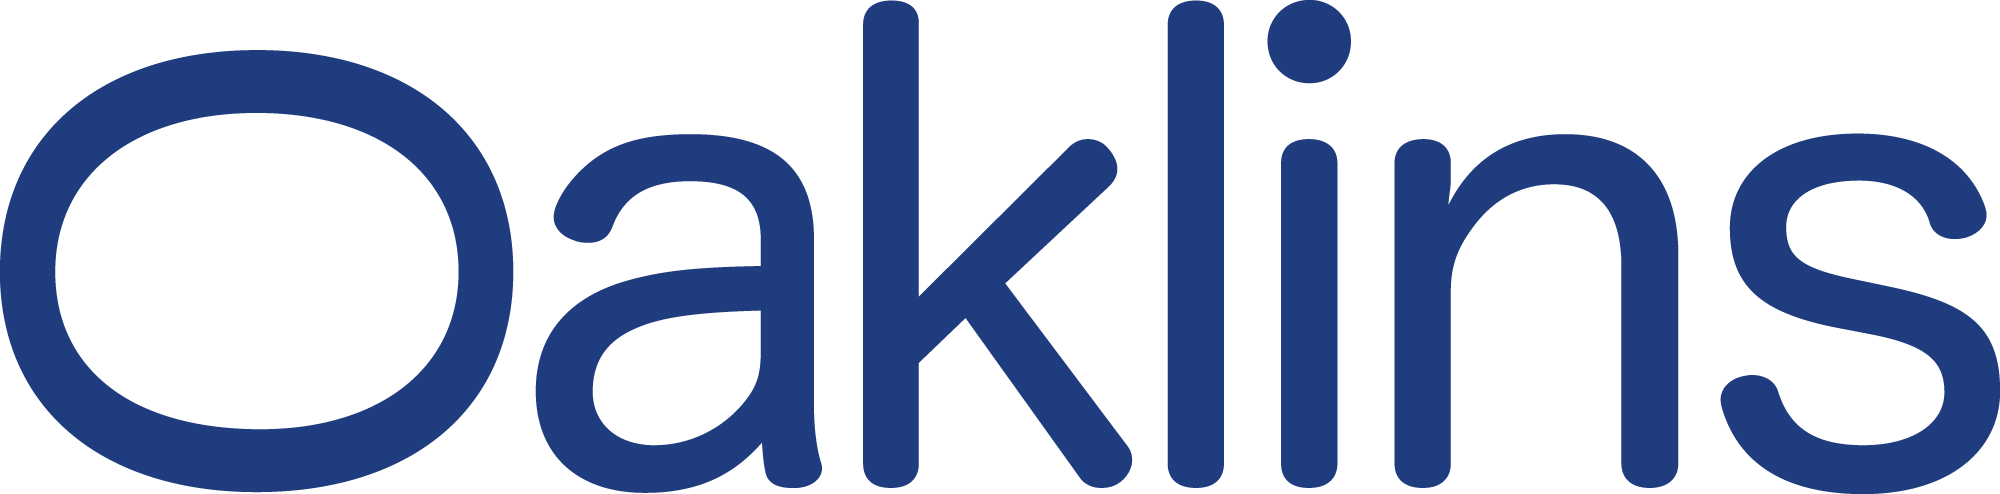 Oaklins logo